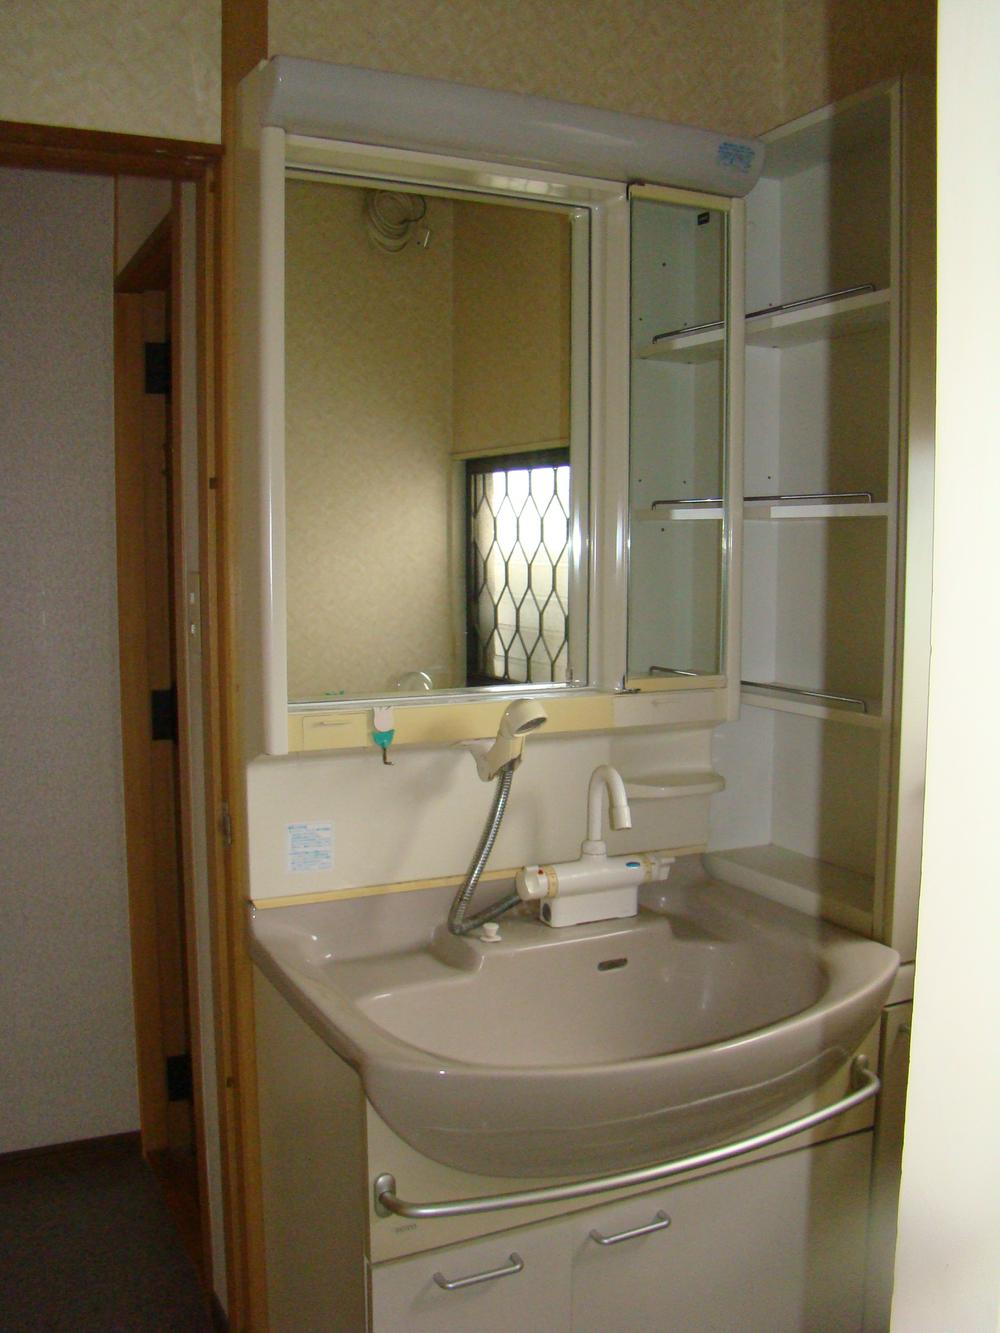 Wash basin, toilet. Indoor (March 2012) shooting